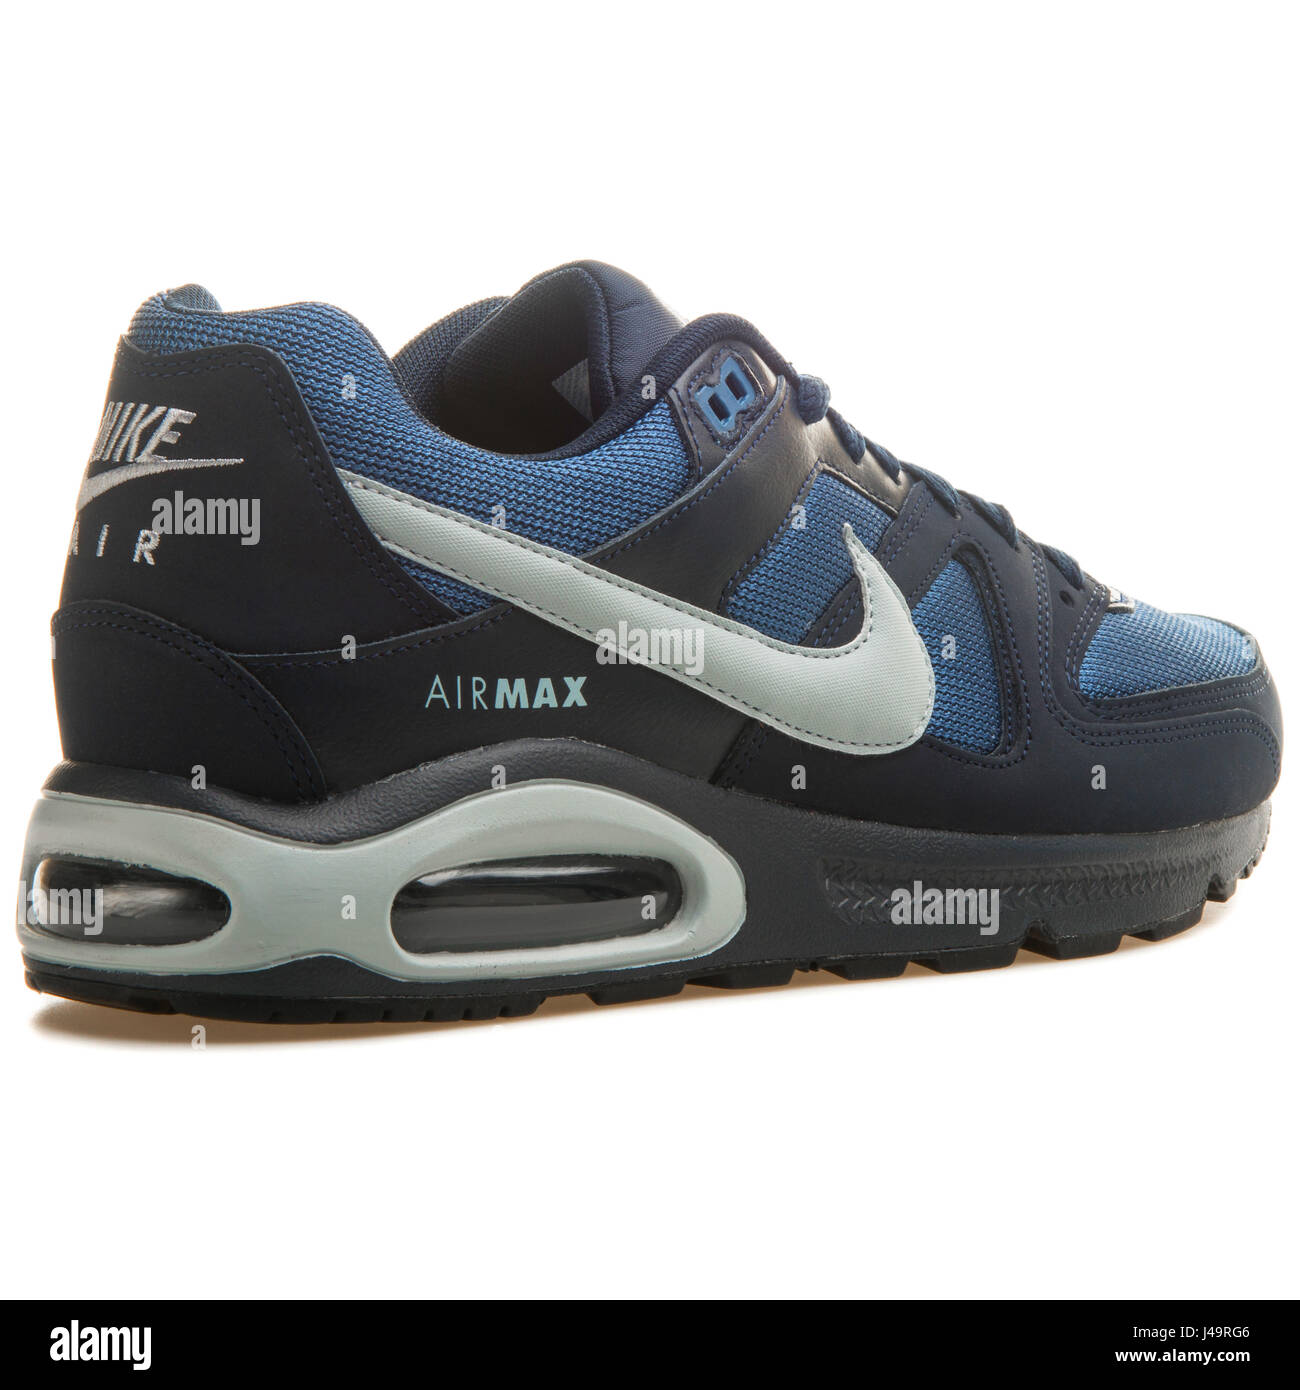 Nike air max command -Fotos und -Bildmaterial in hoher Auflösung – Alamy